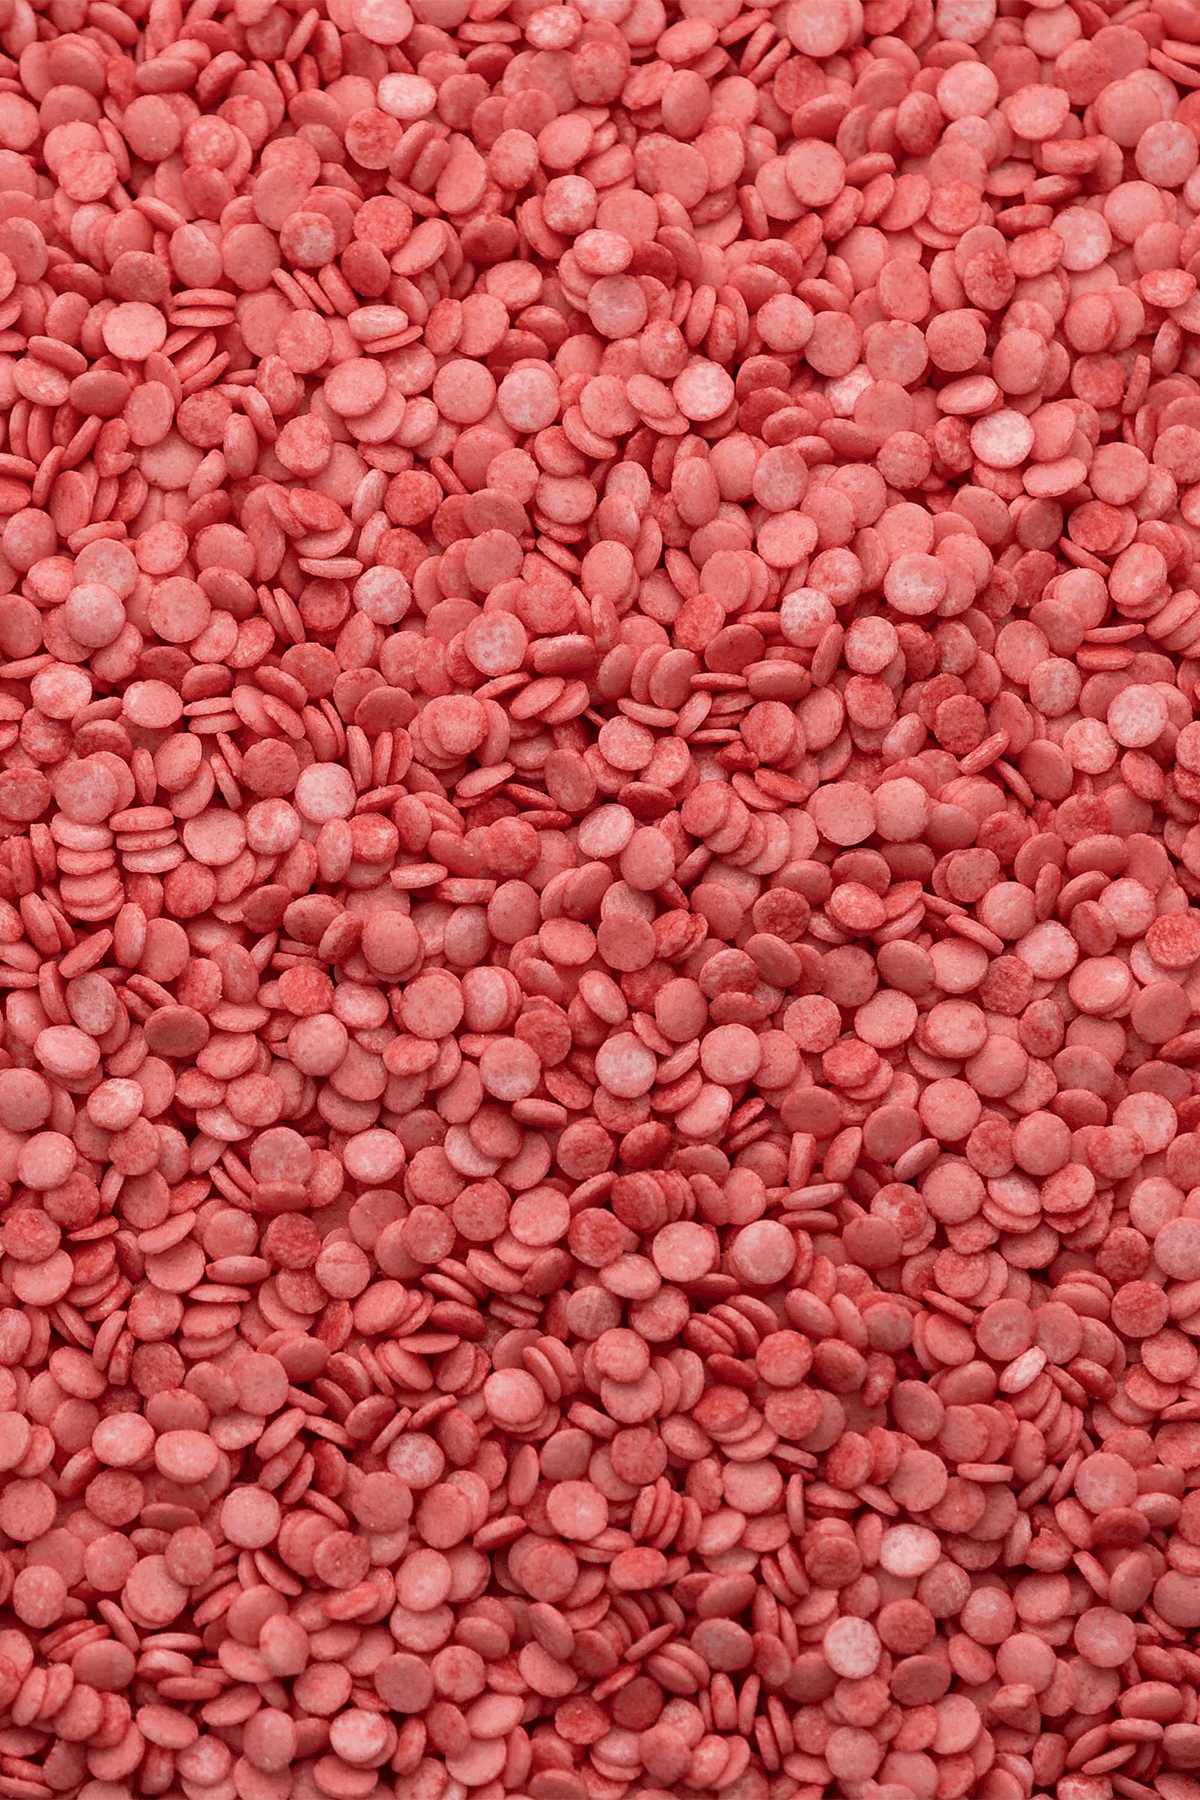 Natural Confetti - Red (Vegan) Sprinkles Sprinkly